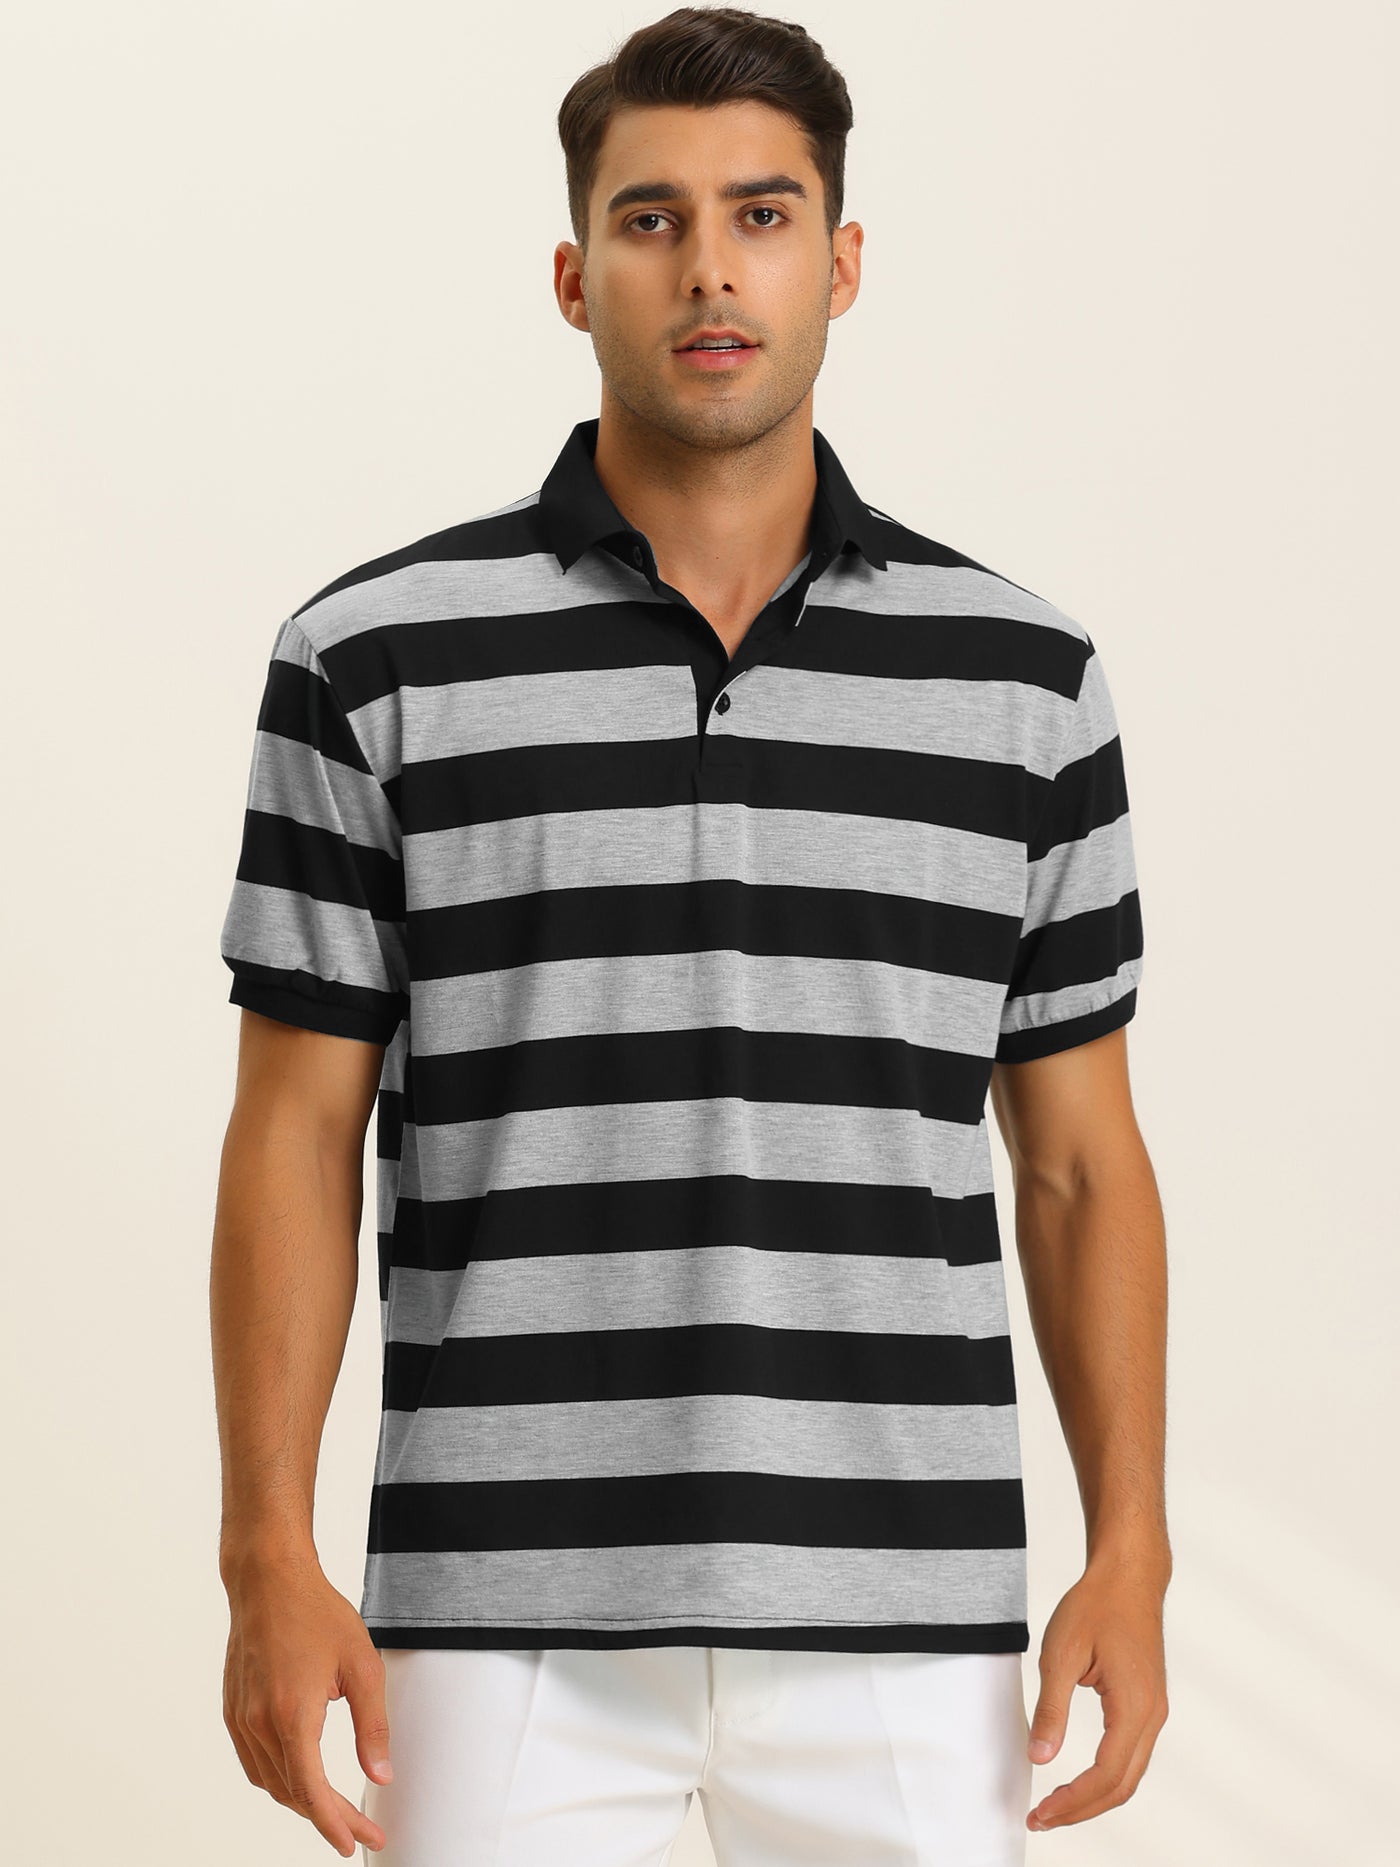 Bublédon Striped Shirts for Men's Point Collar Short Sleeve Casual Golf Polo Shirt